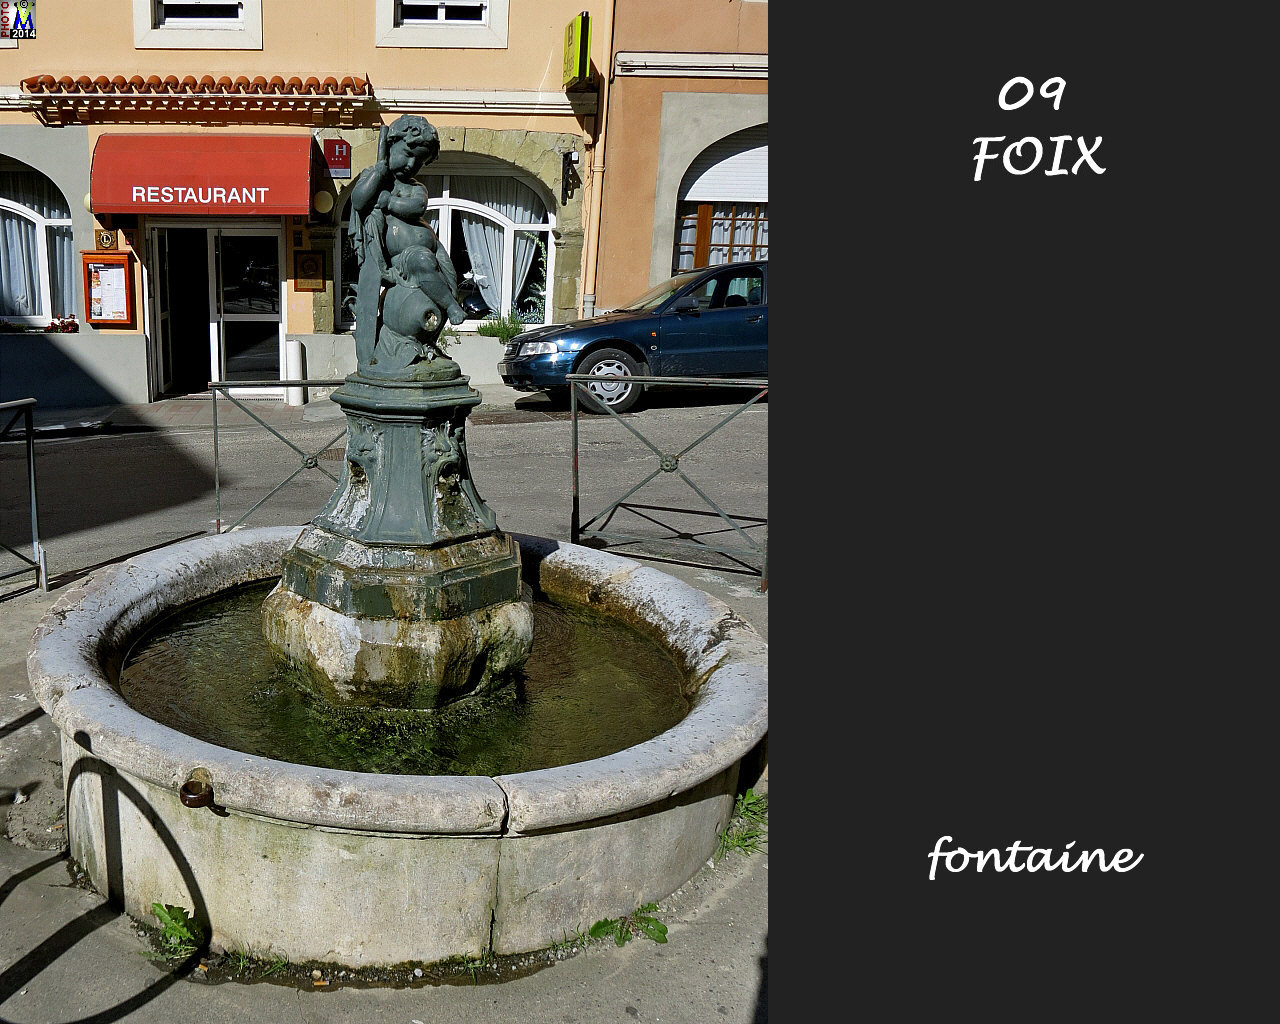 09FOIX_fontaine_110.jpg